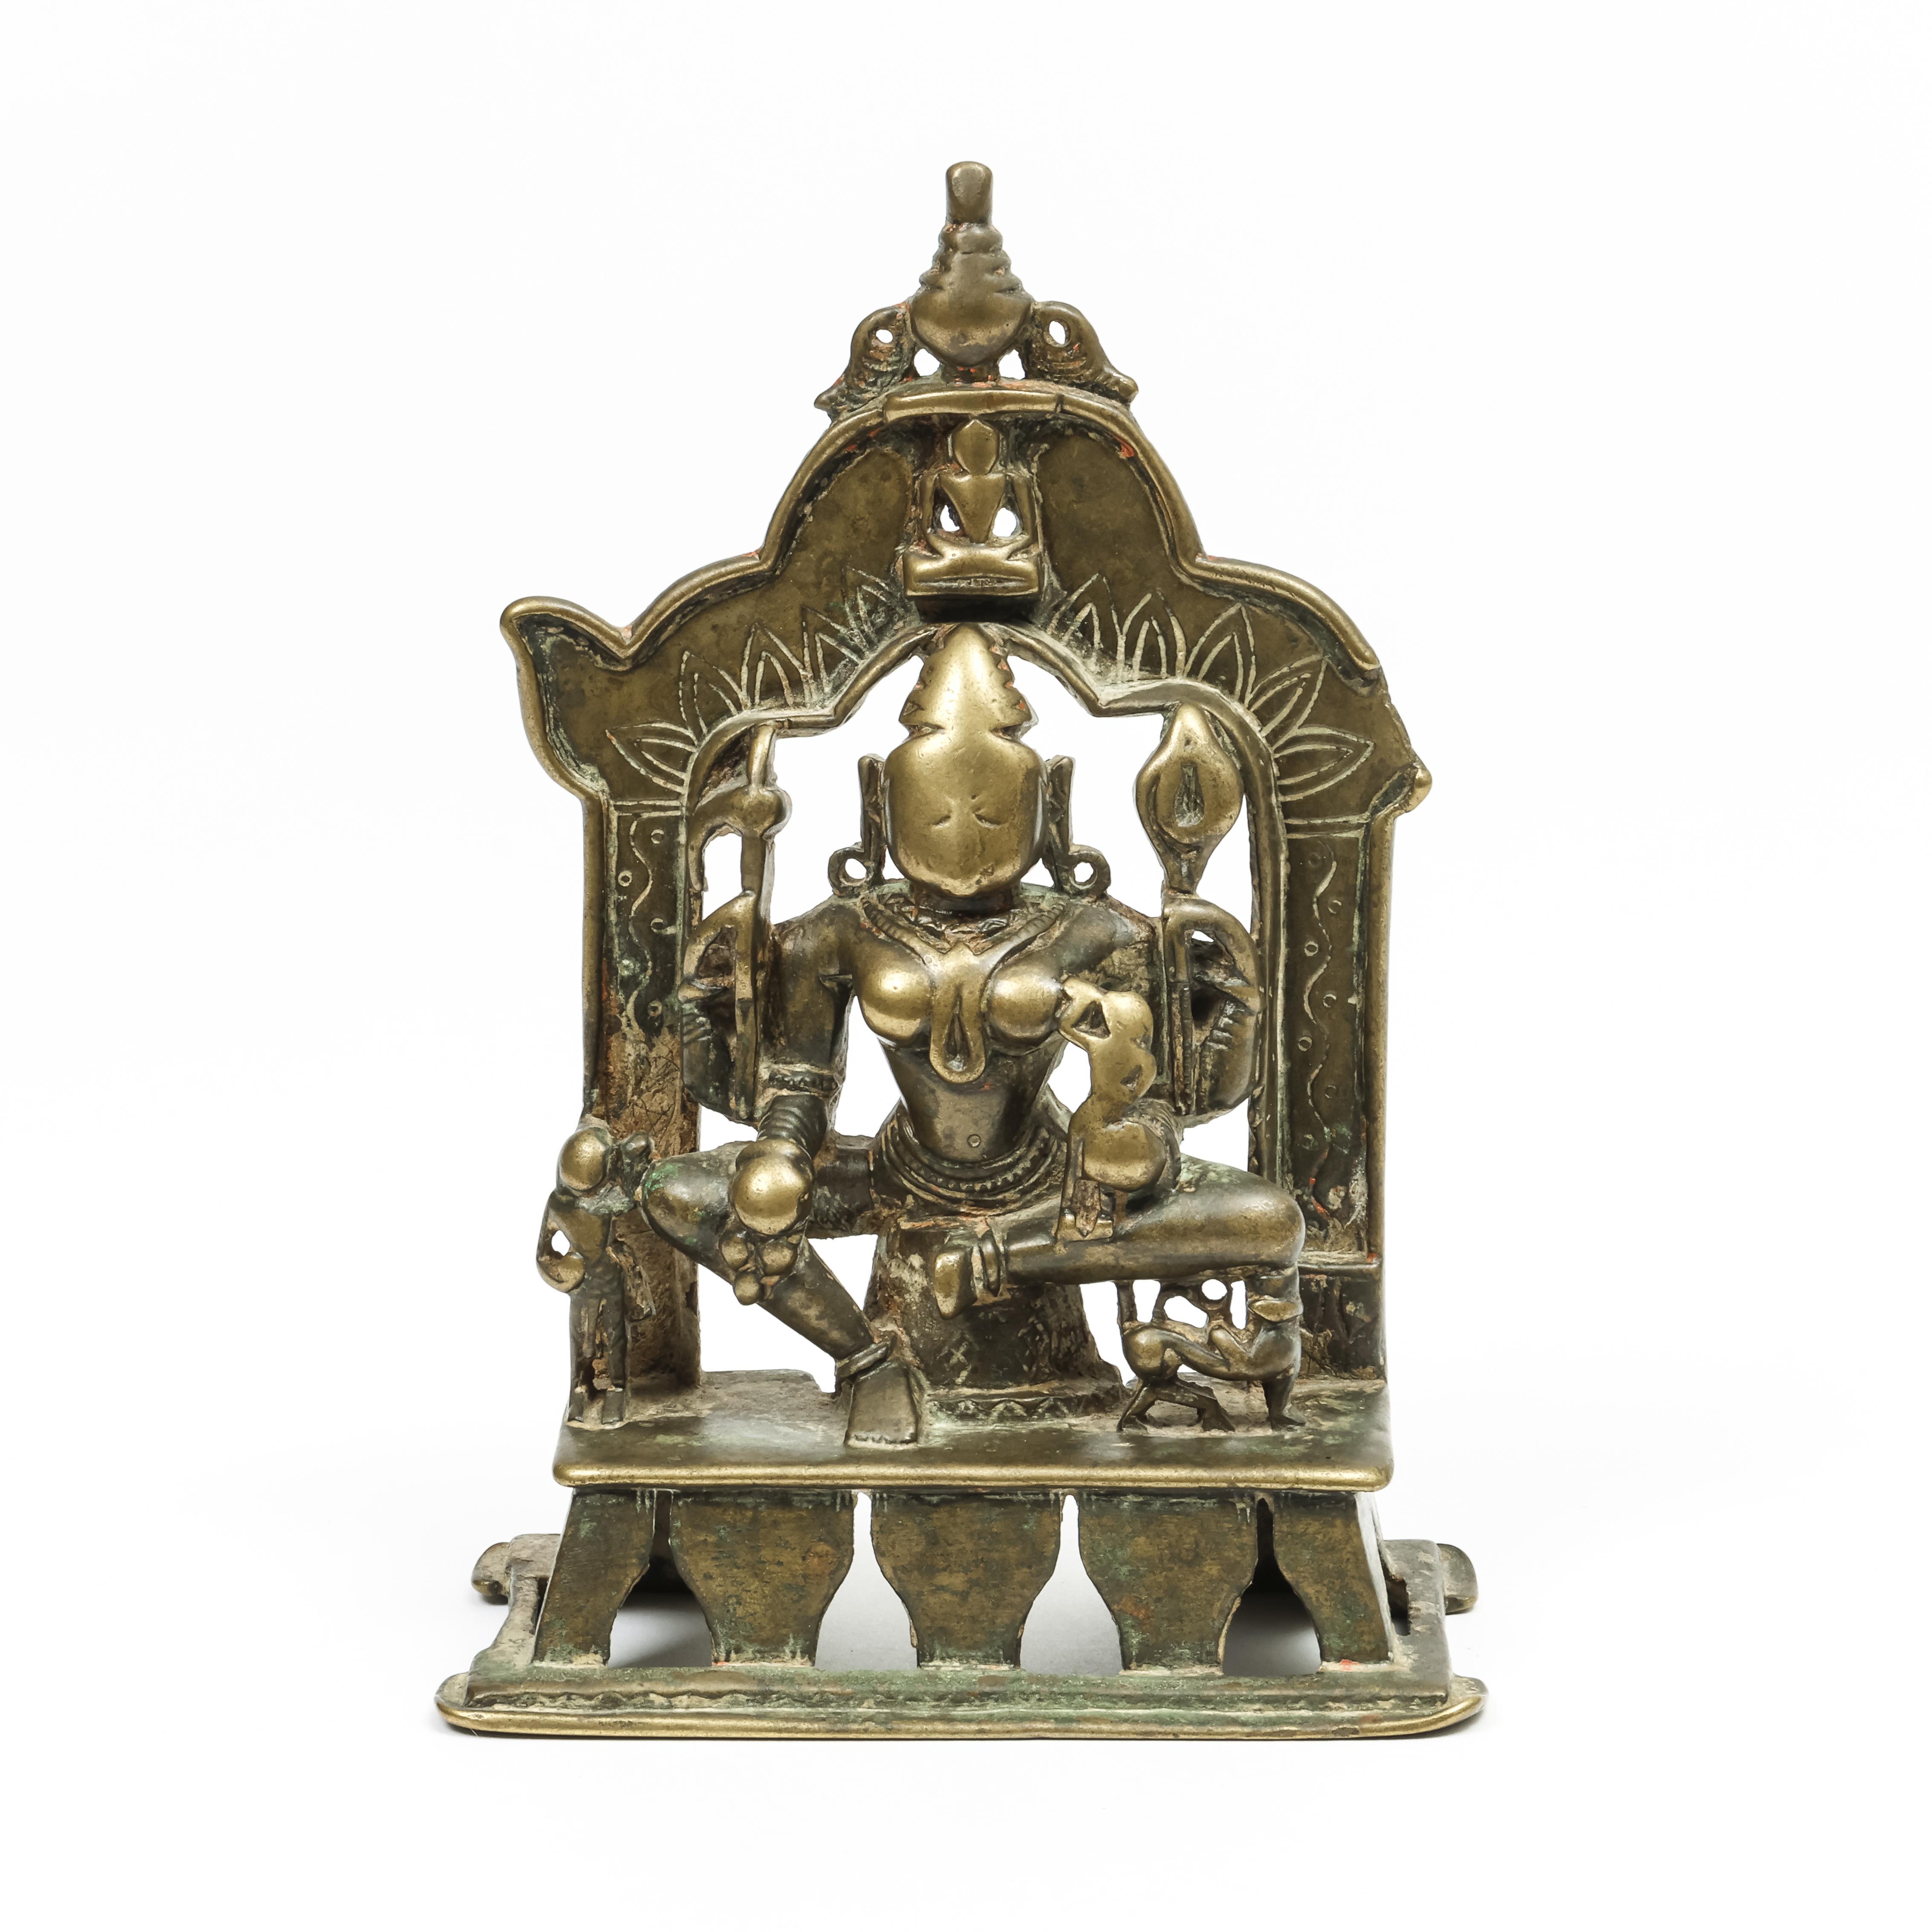 North-West India, bronze altar shrine with female deity Ambhika, probably dated 1639.